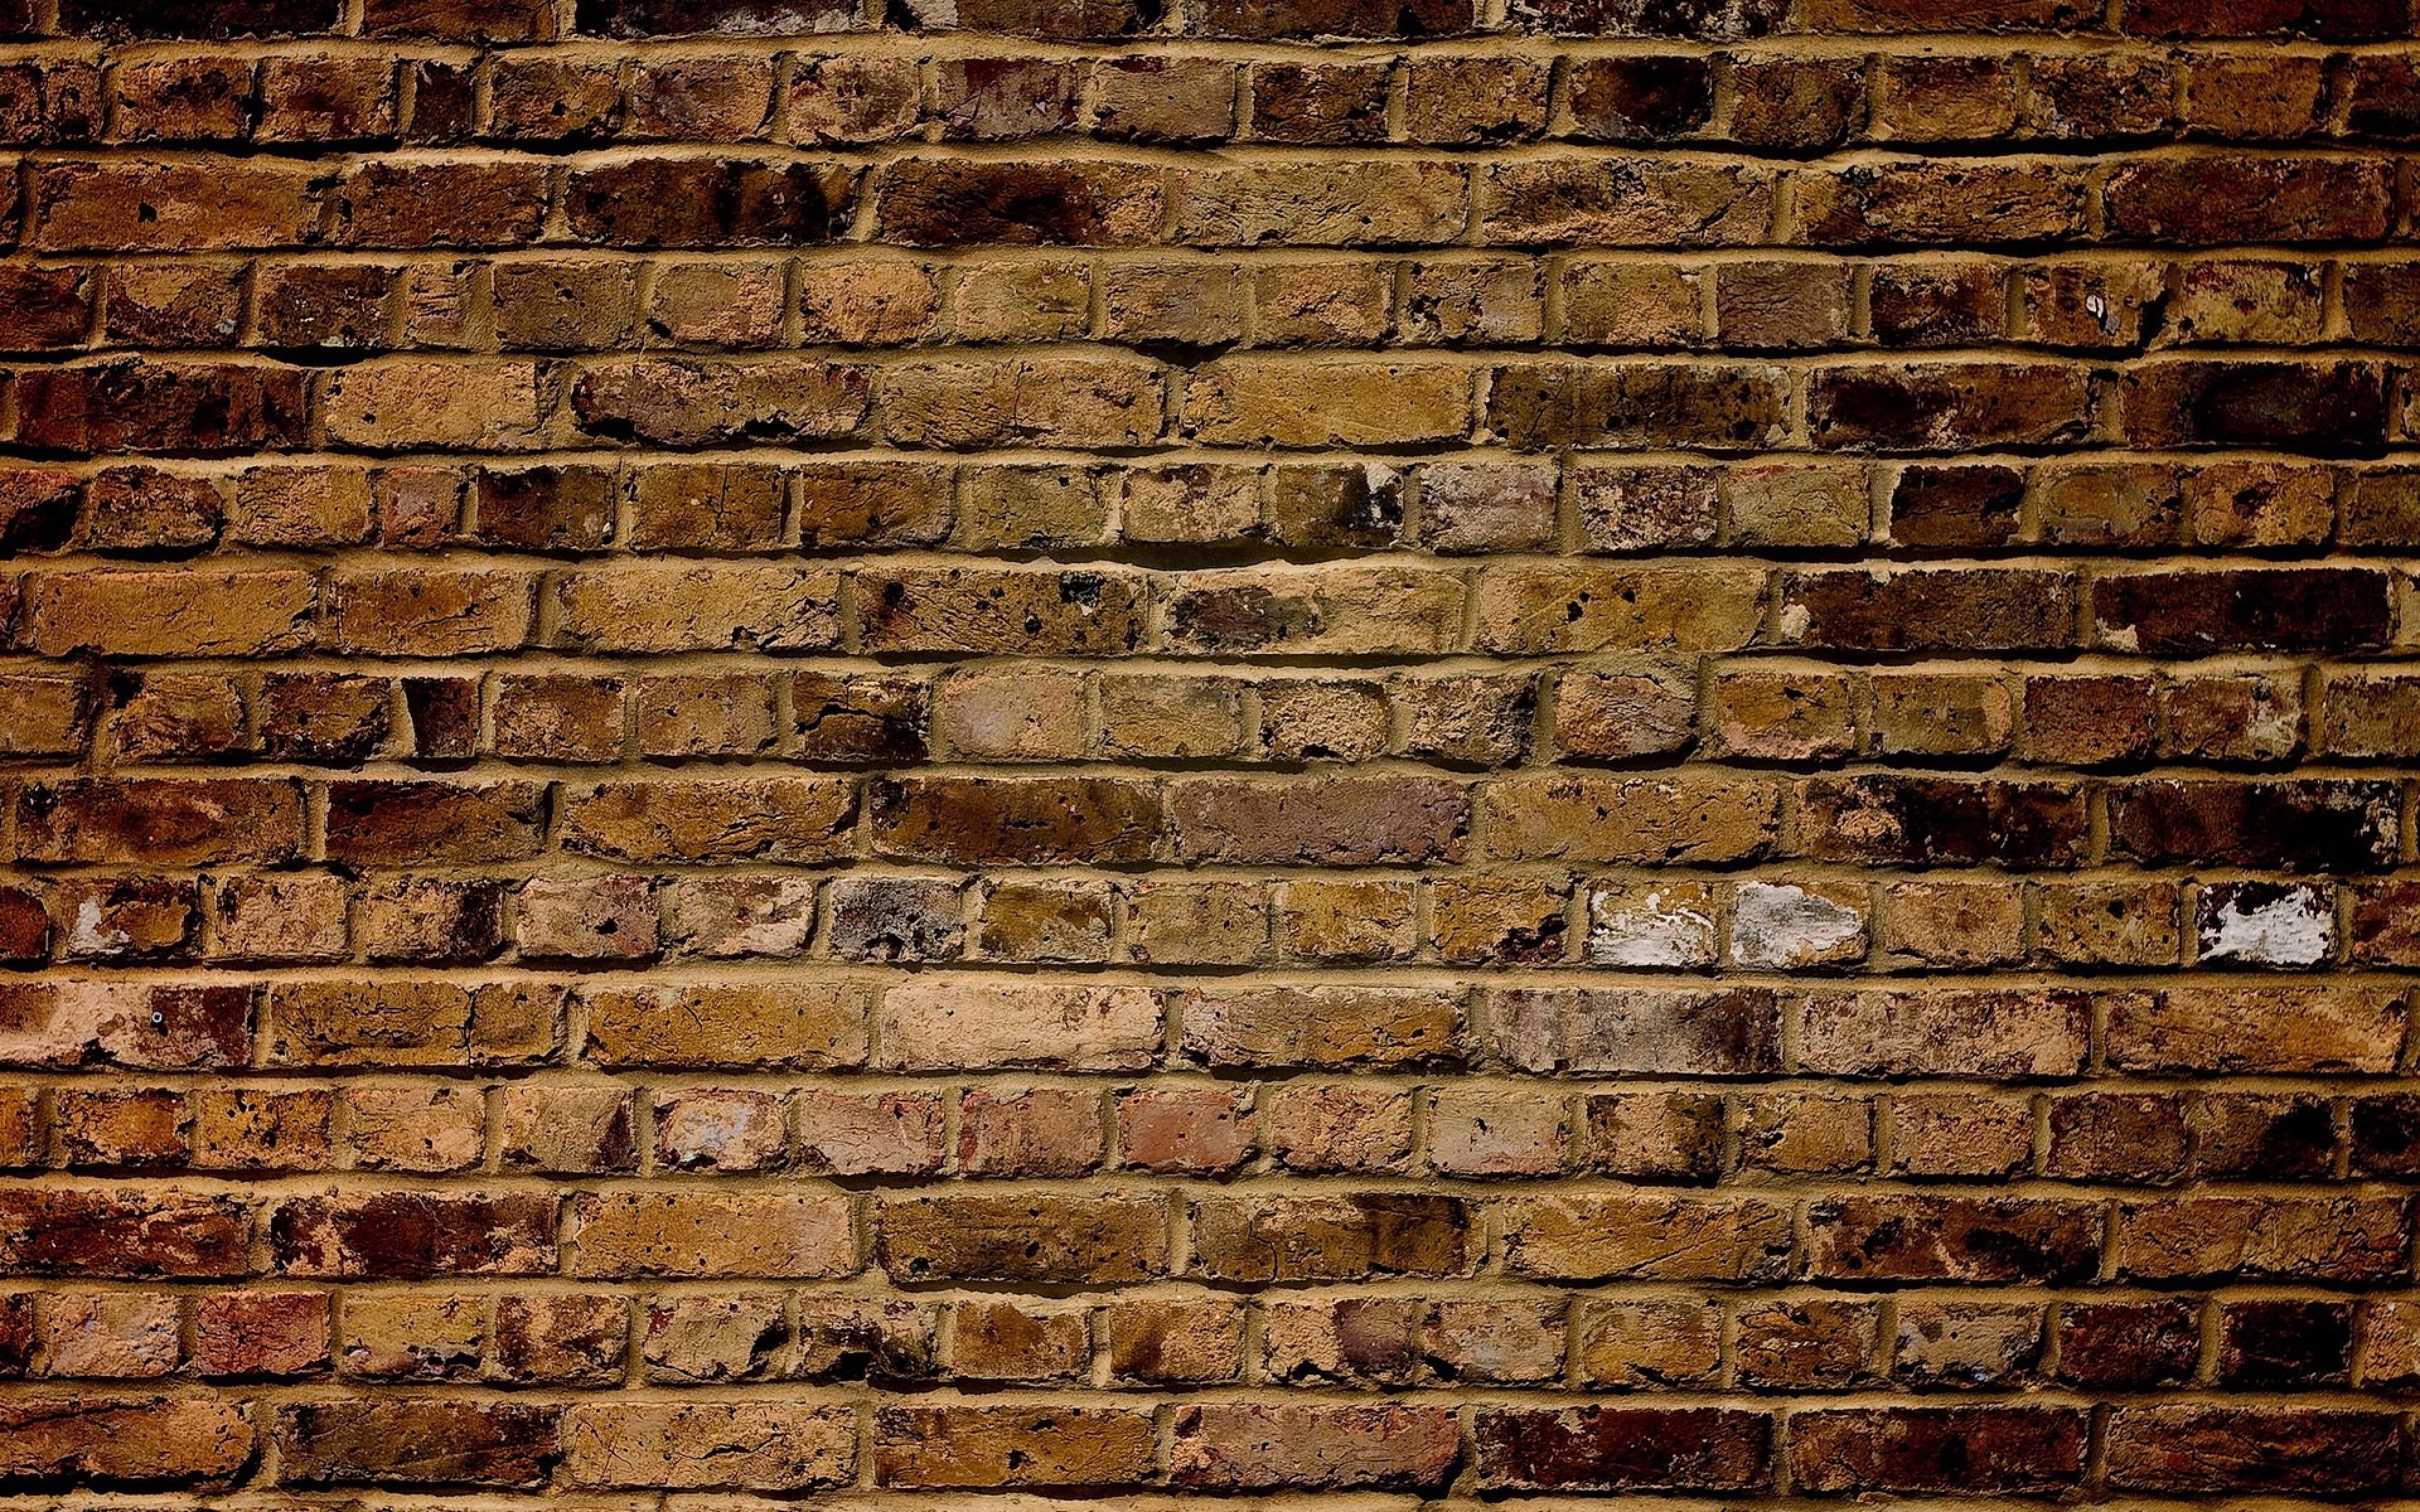 brick wall wallpaper,brickwork,brick,wall,stone wall